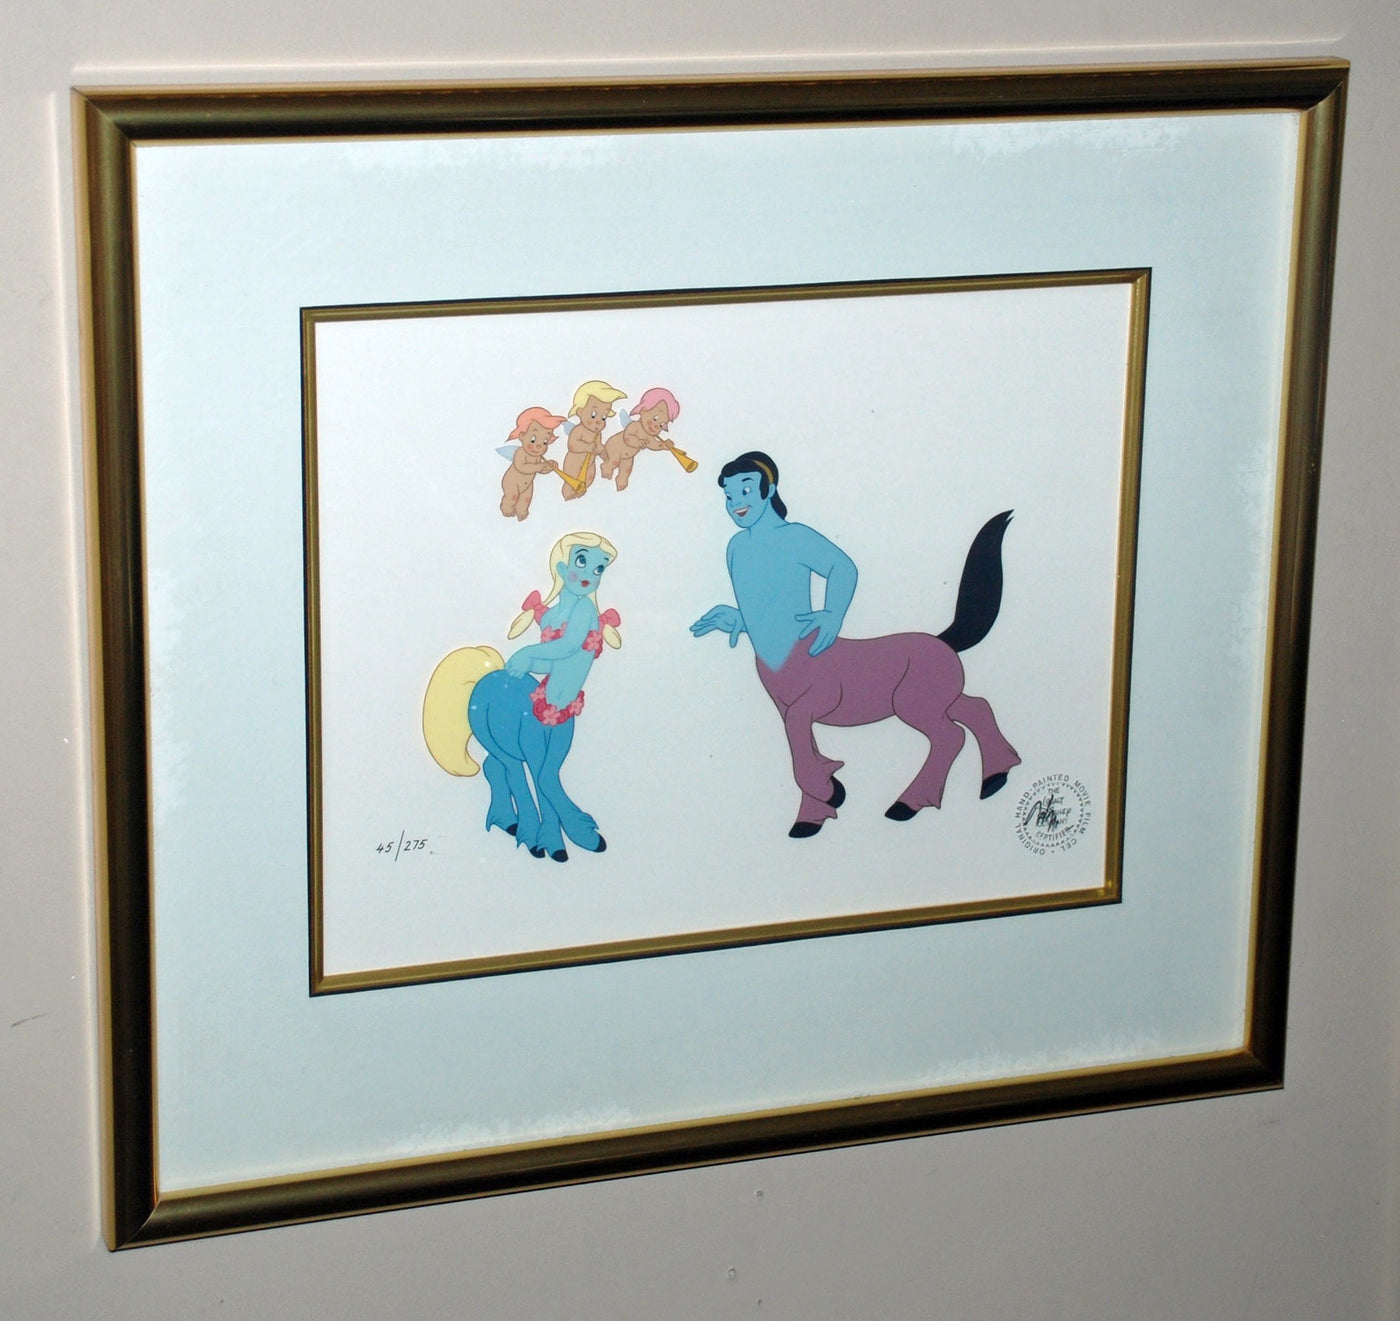 Original Walt Disney Limited Edition Cel "Centaur and Centaurette with Cupids" from Fantasia